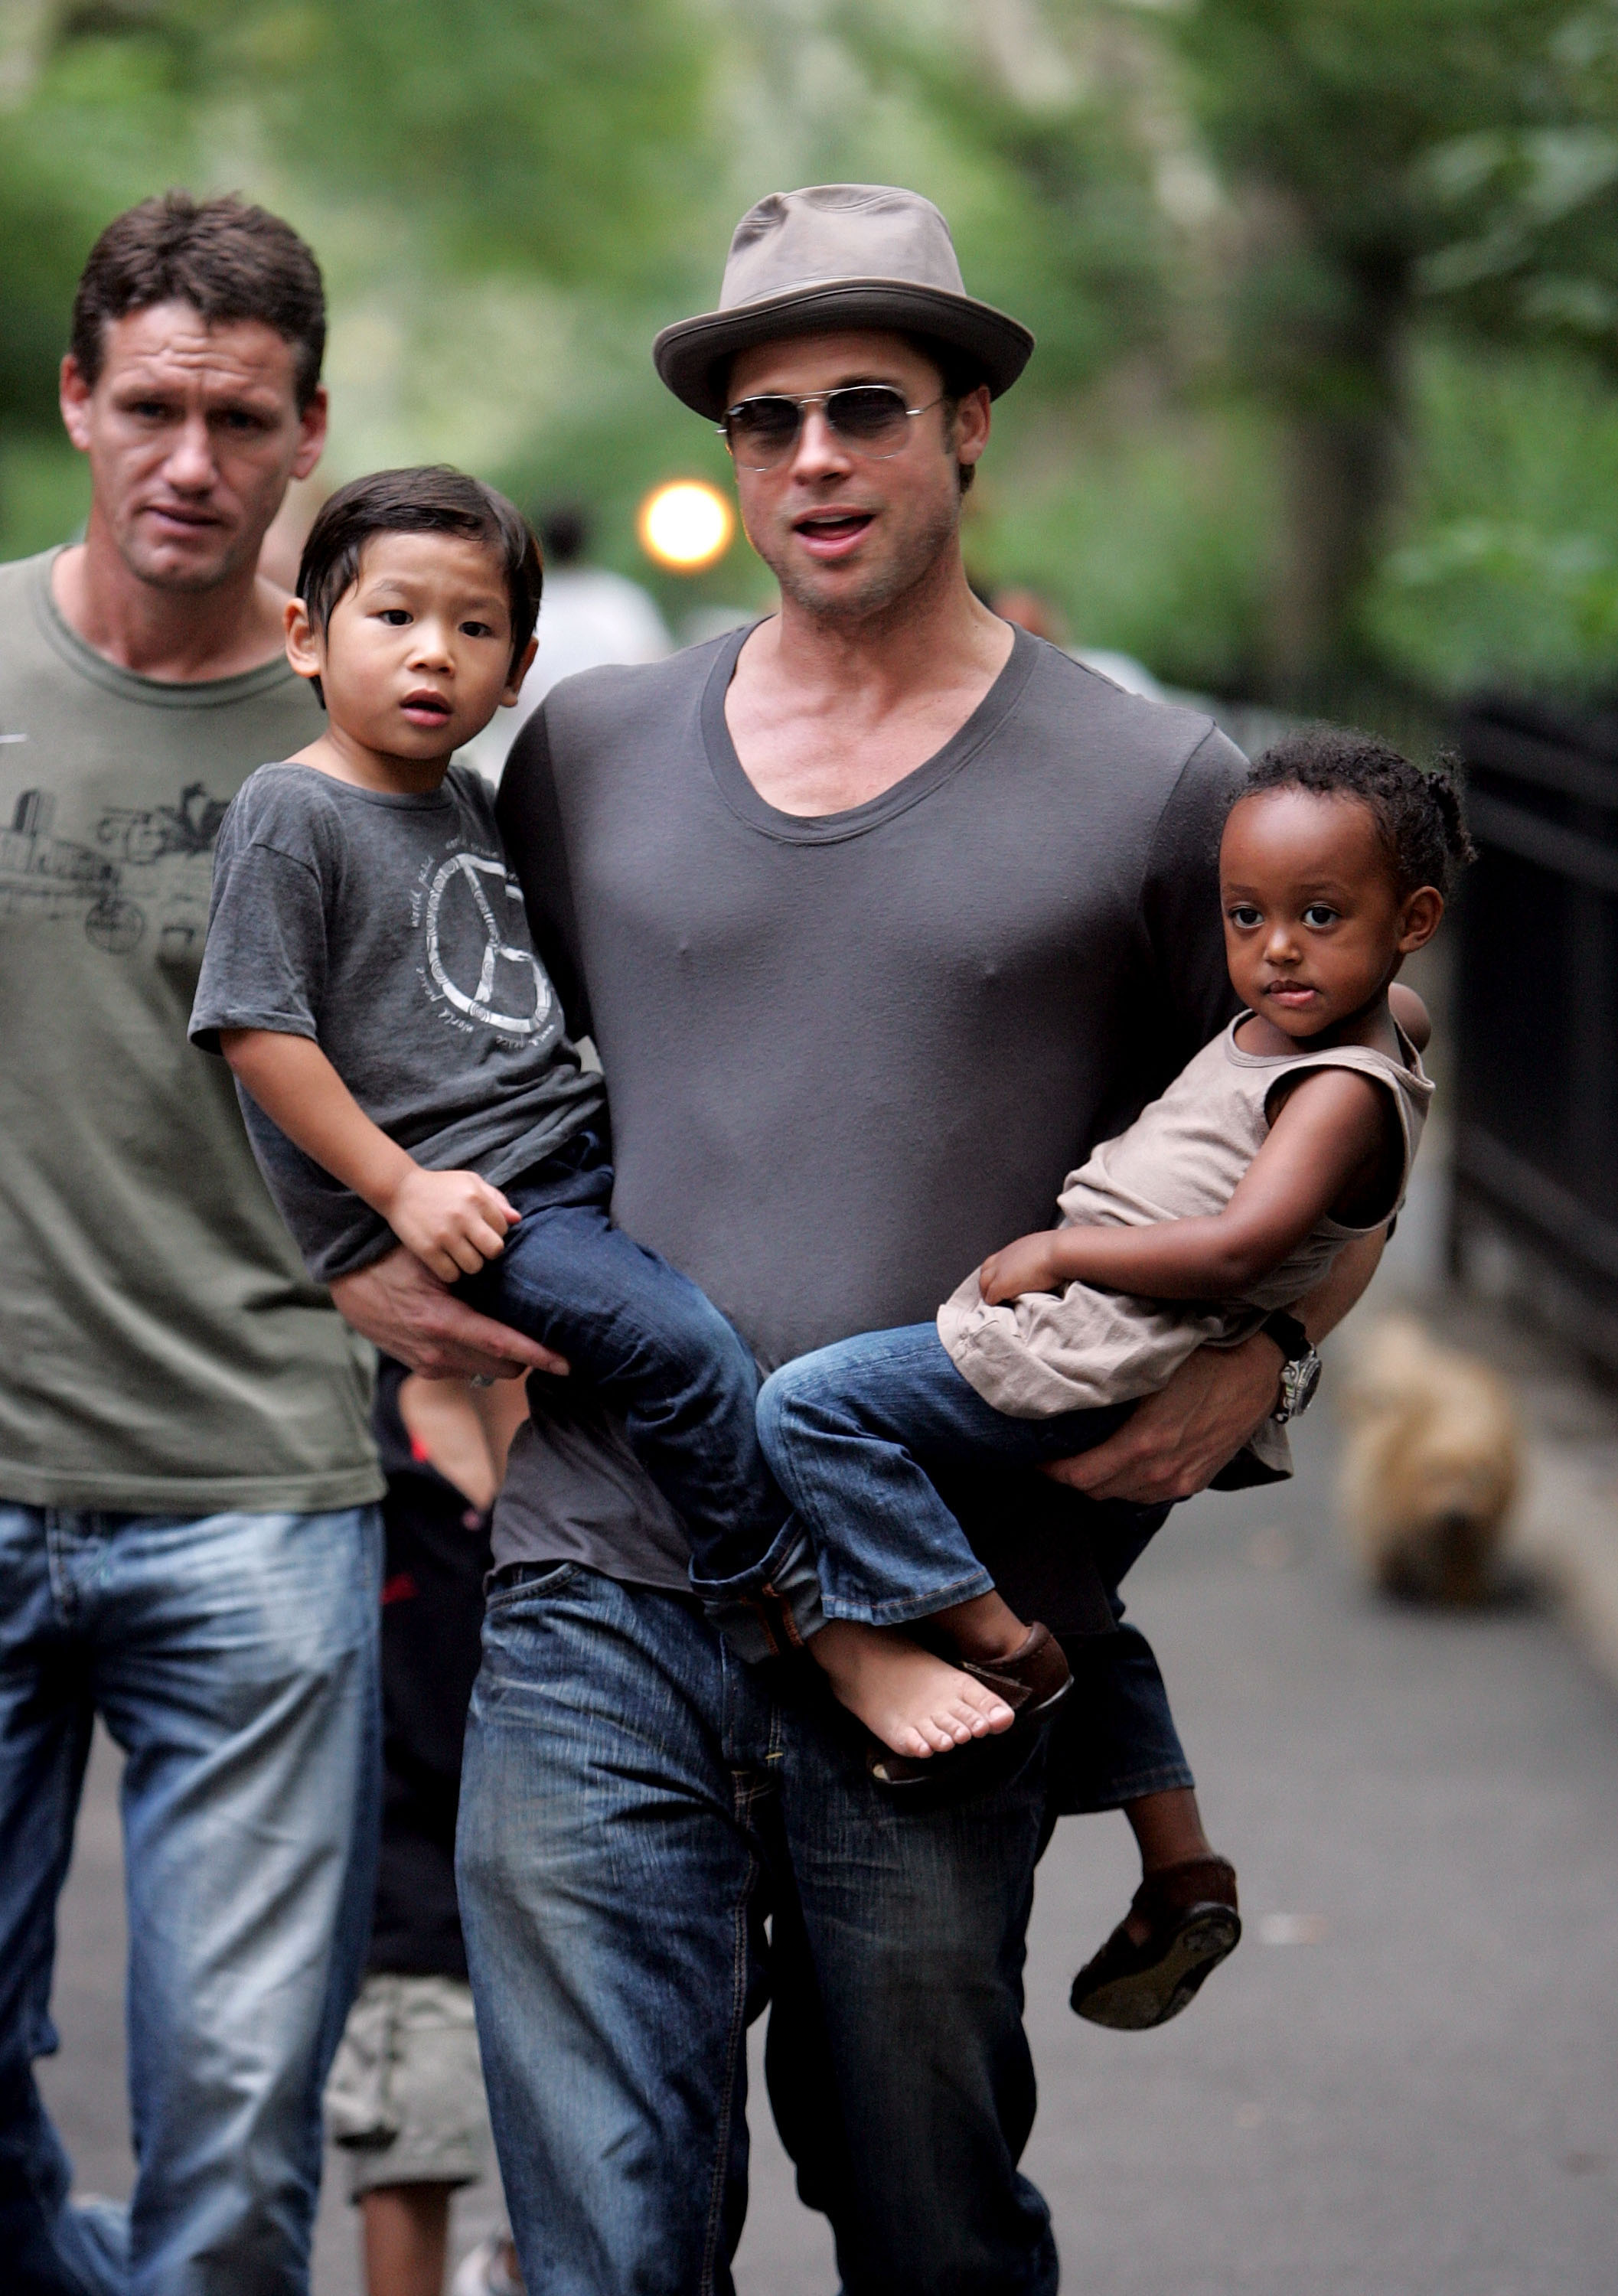 Brad Pitt and children Zahara Jolie-Pitt, Pax Jolie-Pitt and Maddox Jolie-Pitt in New York City on August 26, 2007. | Source: Getty Images